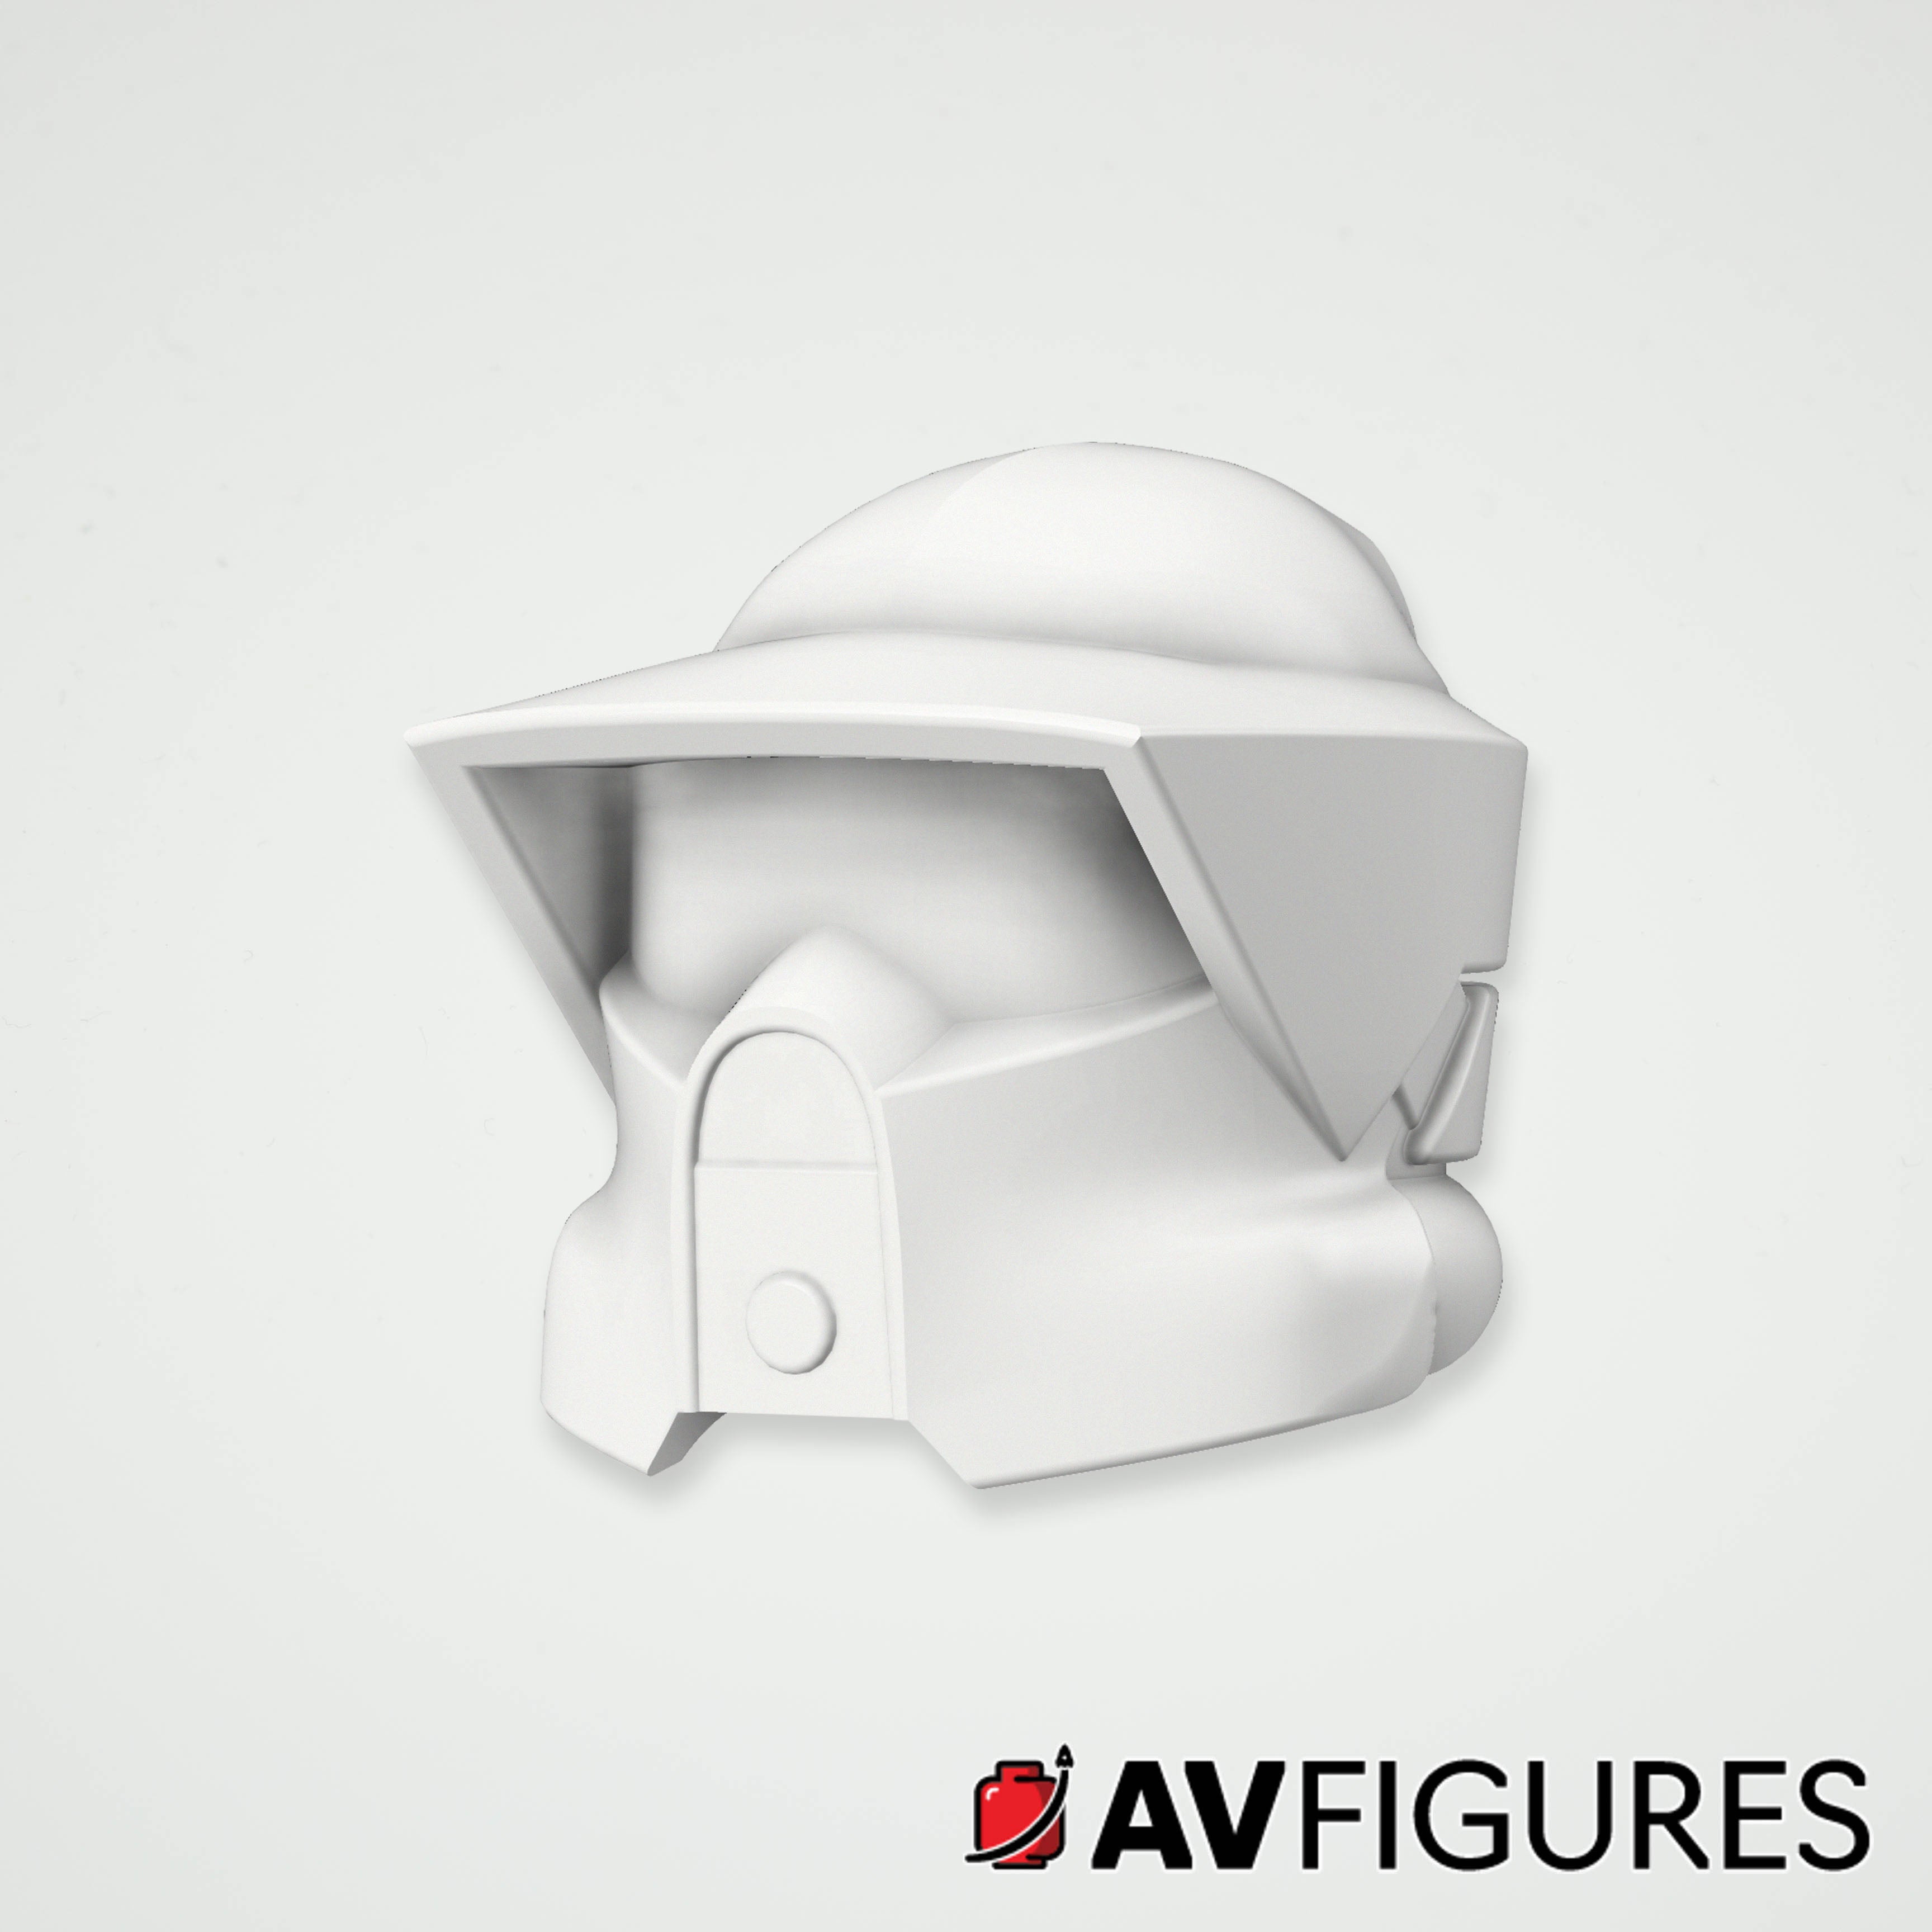 P2 ARF ABS Helmet